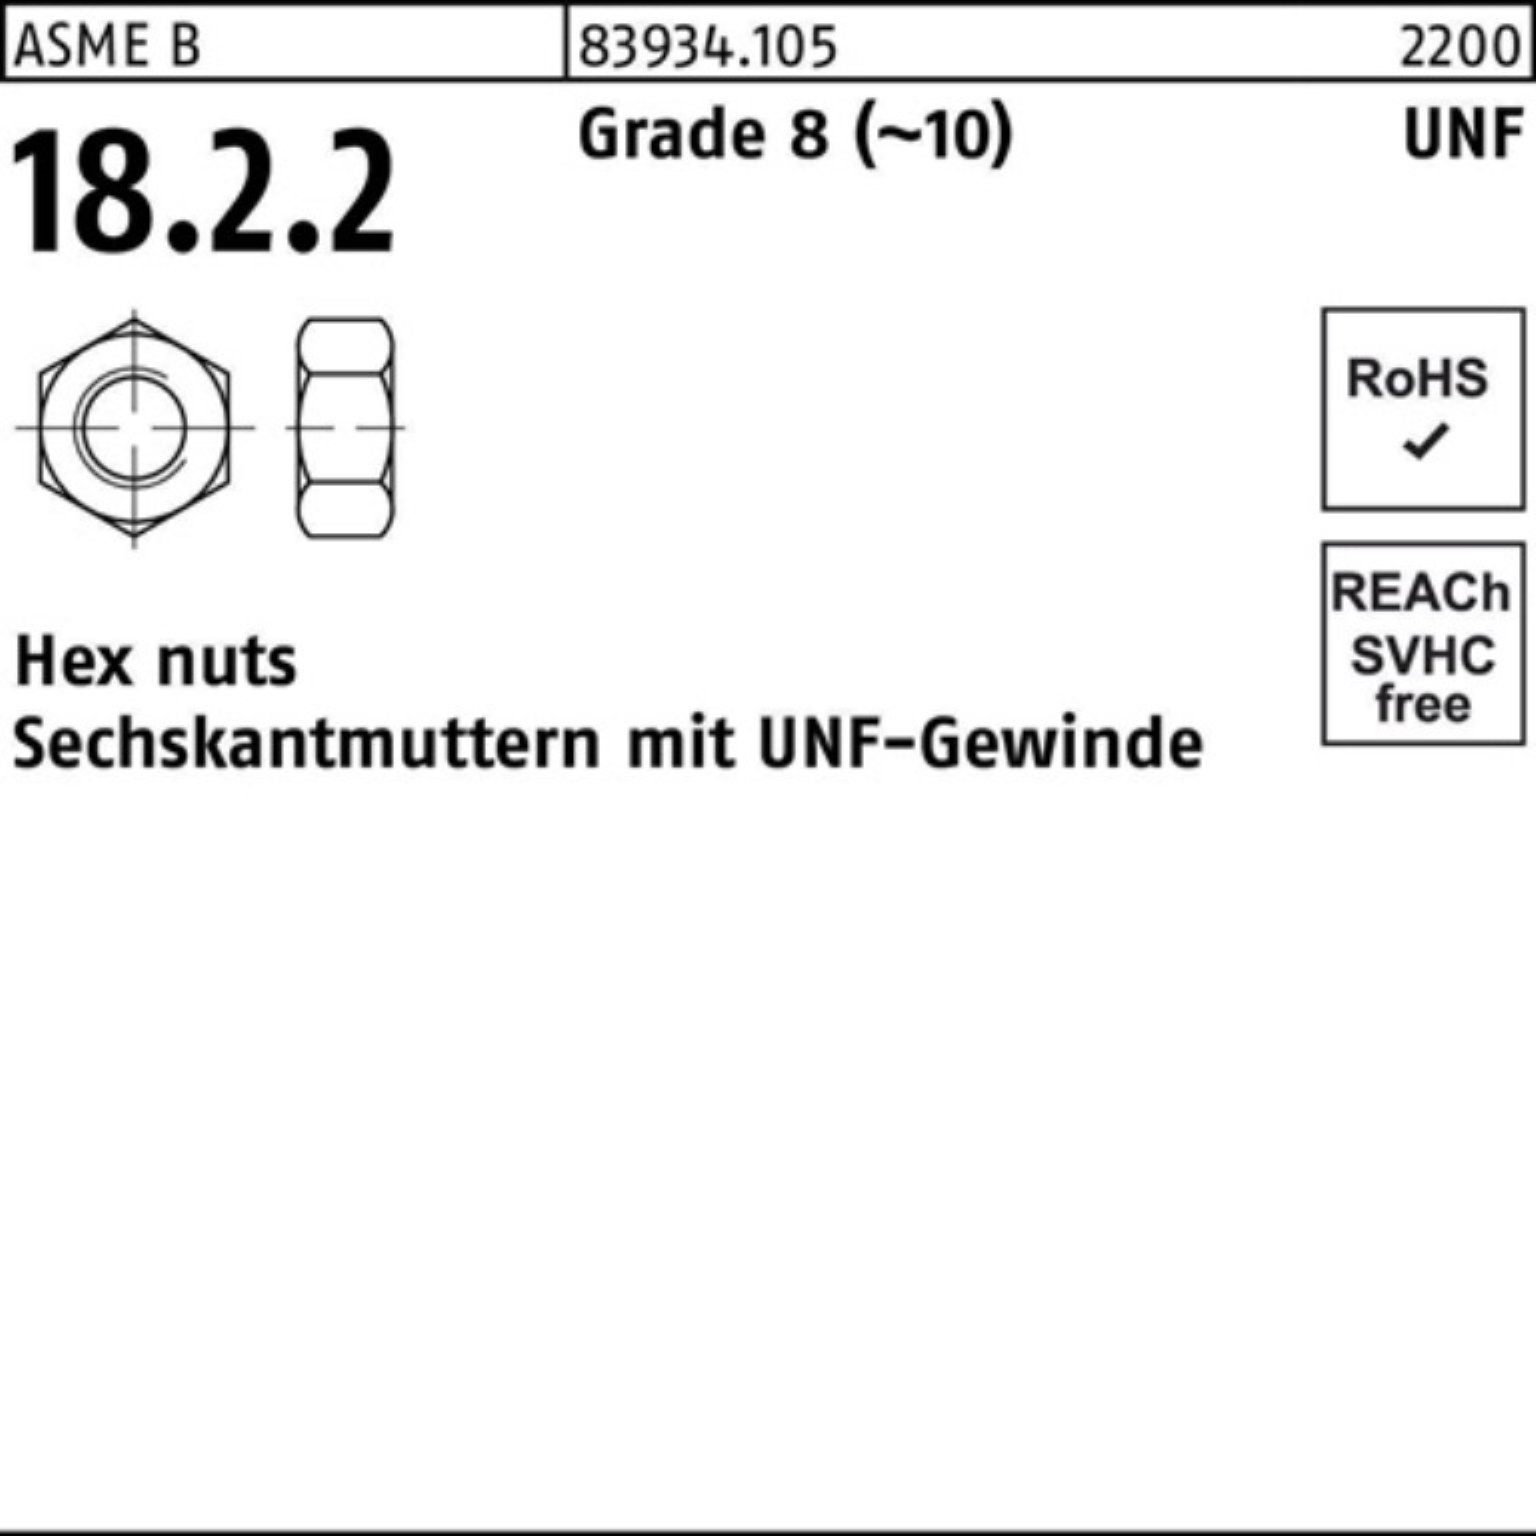 Reyher Muttern 100er 10 (10) Sechskantmutter 8 1/4 1 R UNF-Gewinde Pack Grade 83934